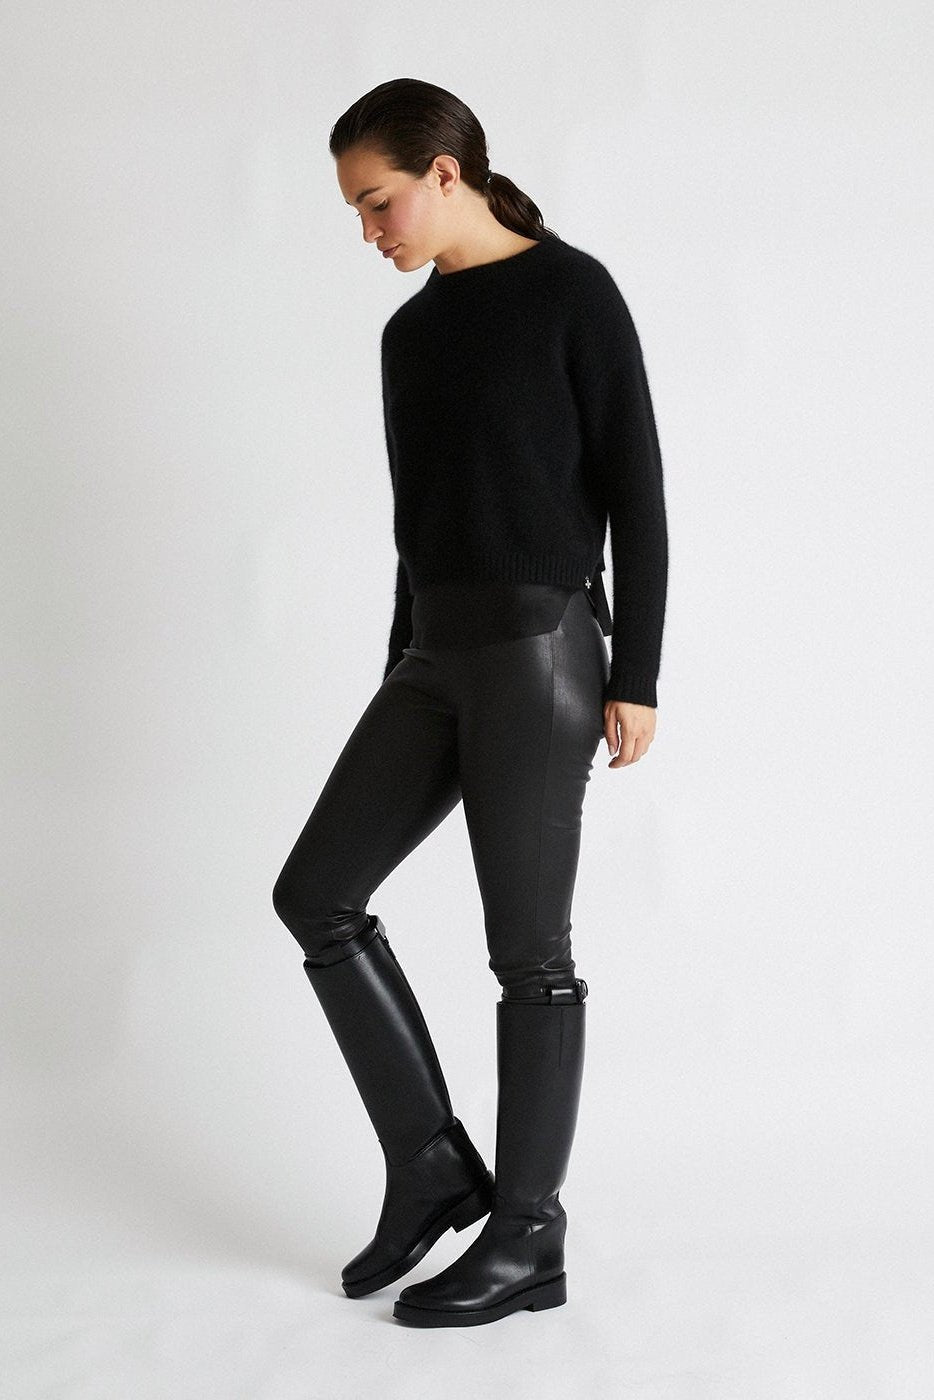 +Beryll Leather Pants | Black - +Beryll Leather Pants | Black - +Beryll Worn By Good People